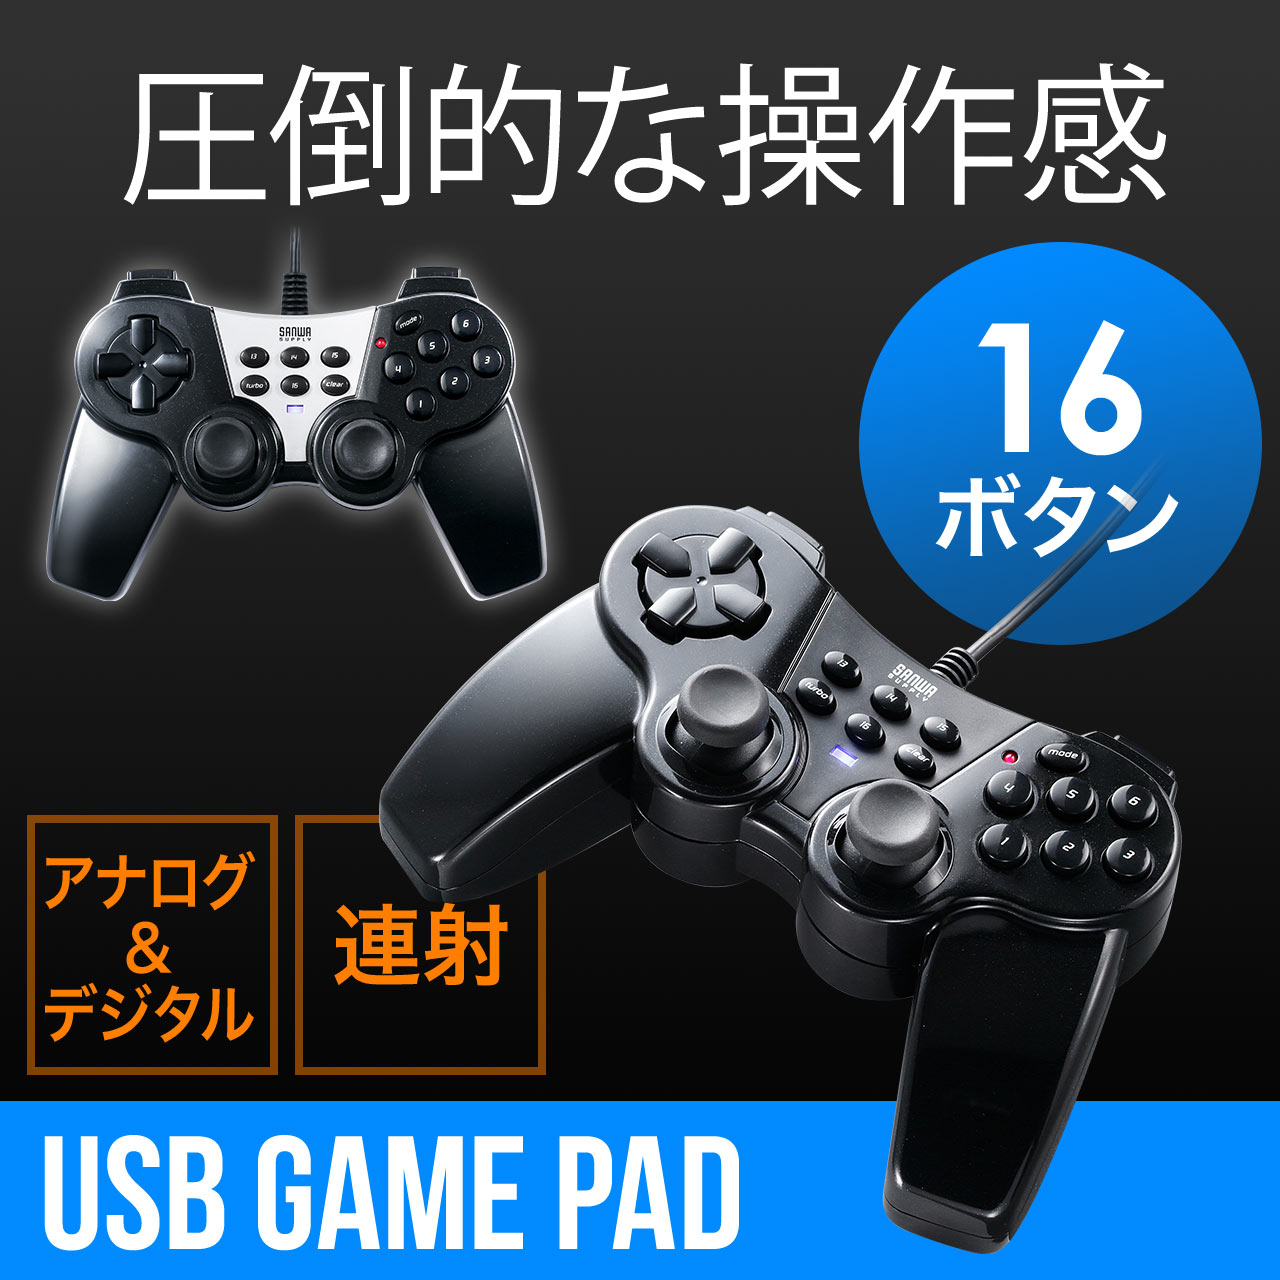 Usbゲームパッド 16ボタン 全ボタン連射対応 振動機能付 日本製高耐久シリコンラバー使用 Windows対応 400 Jyp62uの販売商品 通販ならサンワダイレクト